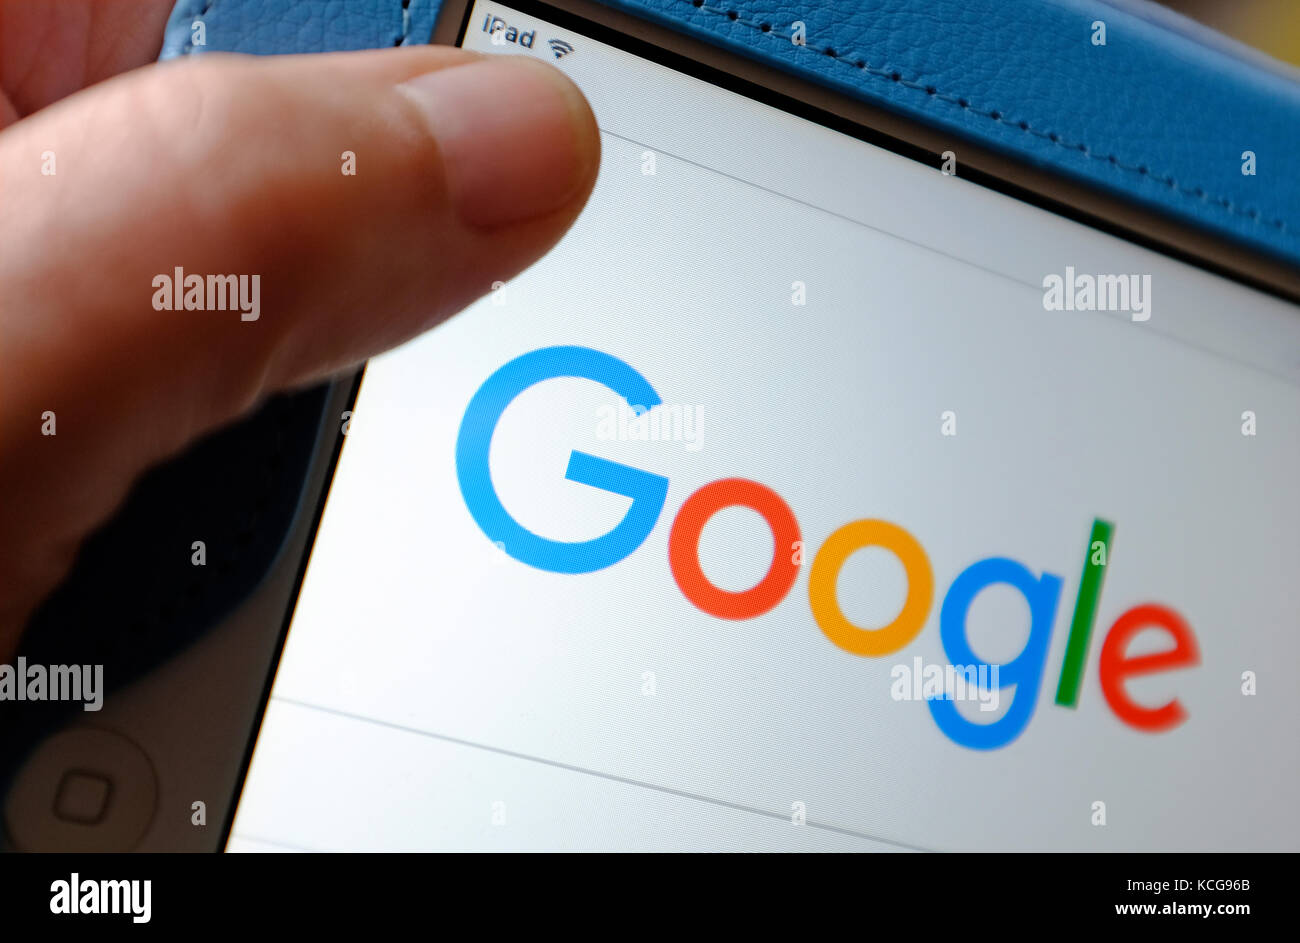 google logo on ipad tablet computer screen Stock Photo